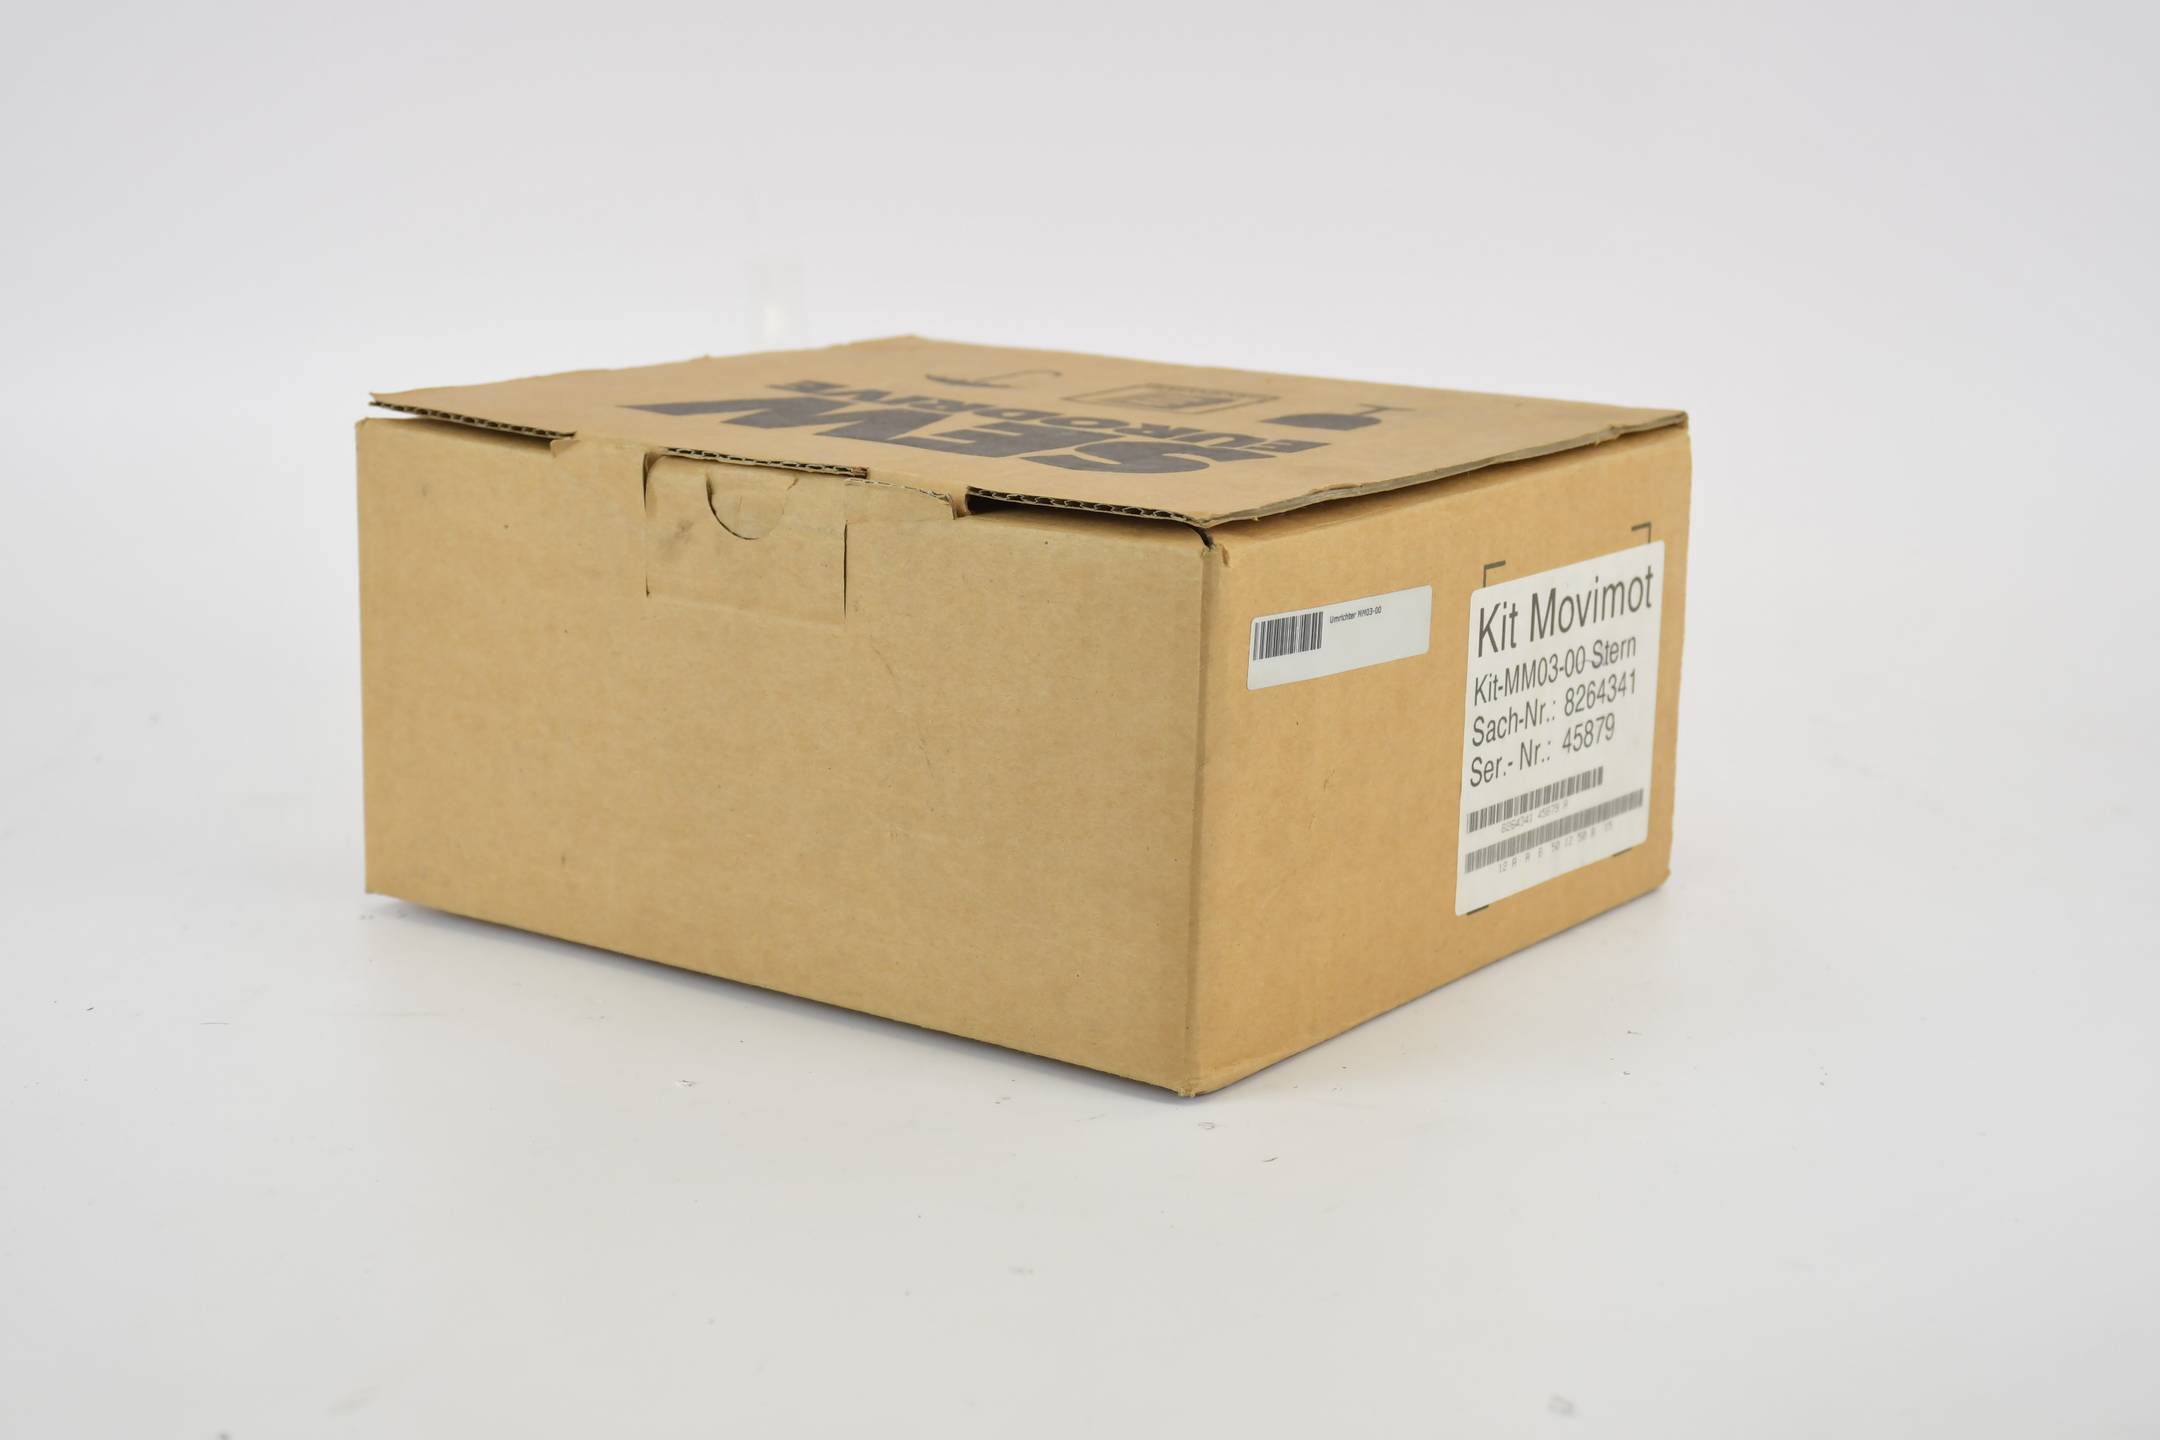 SEW movimot® Kit Kit-MM03-00 Stern ( 8264341 )